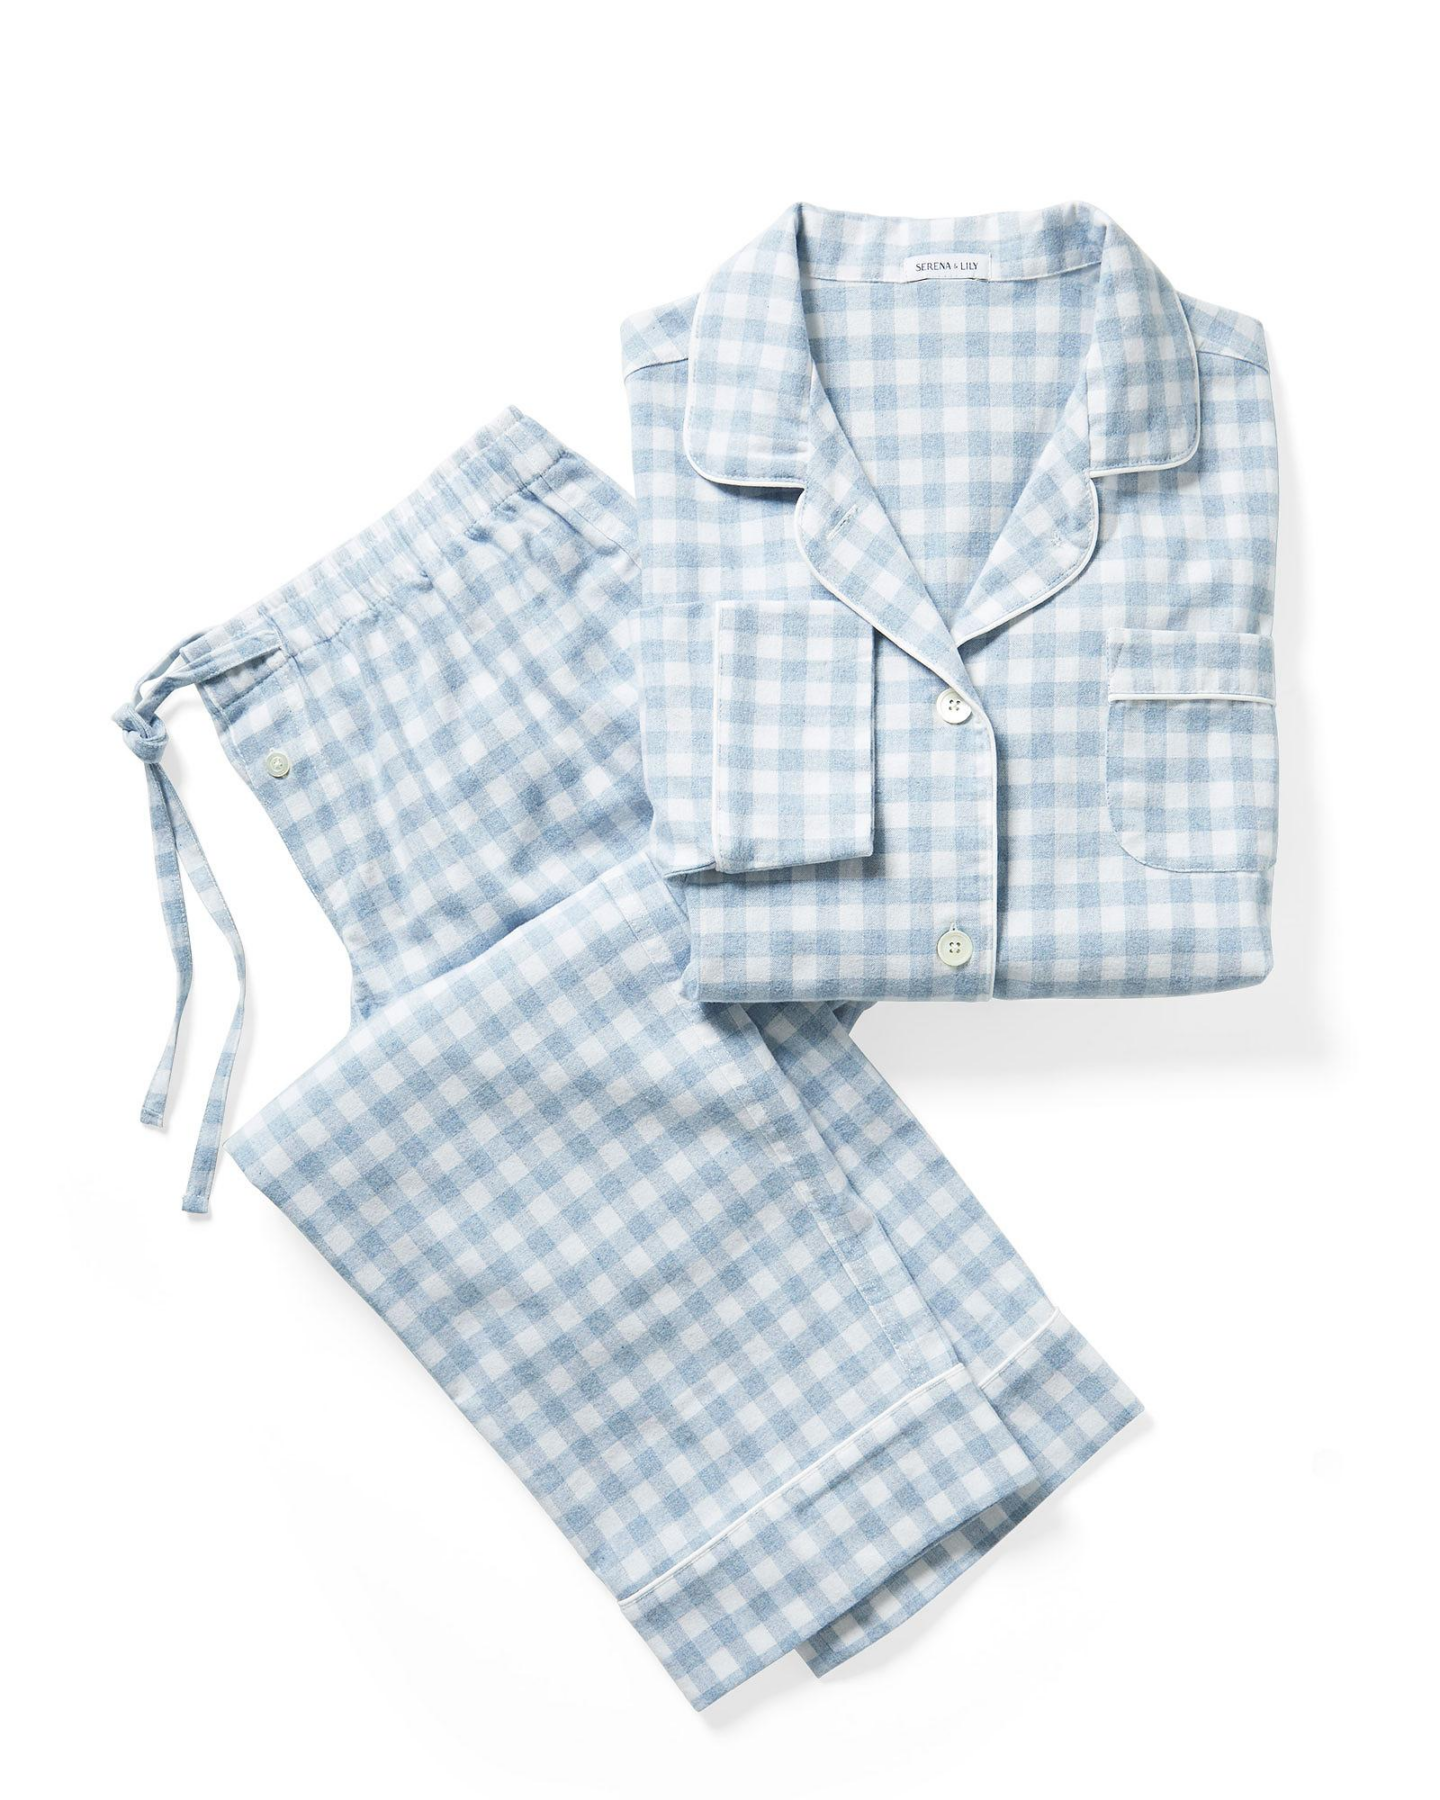 Blue gingham check flannel pajamas - Serena & Lily. #flannelpajamas